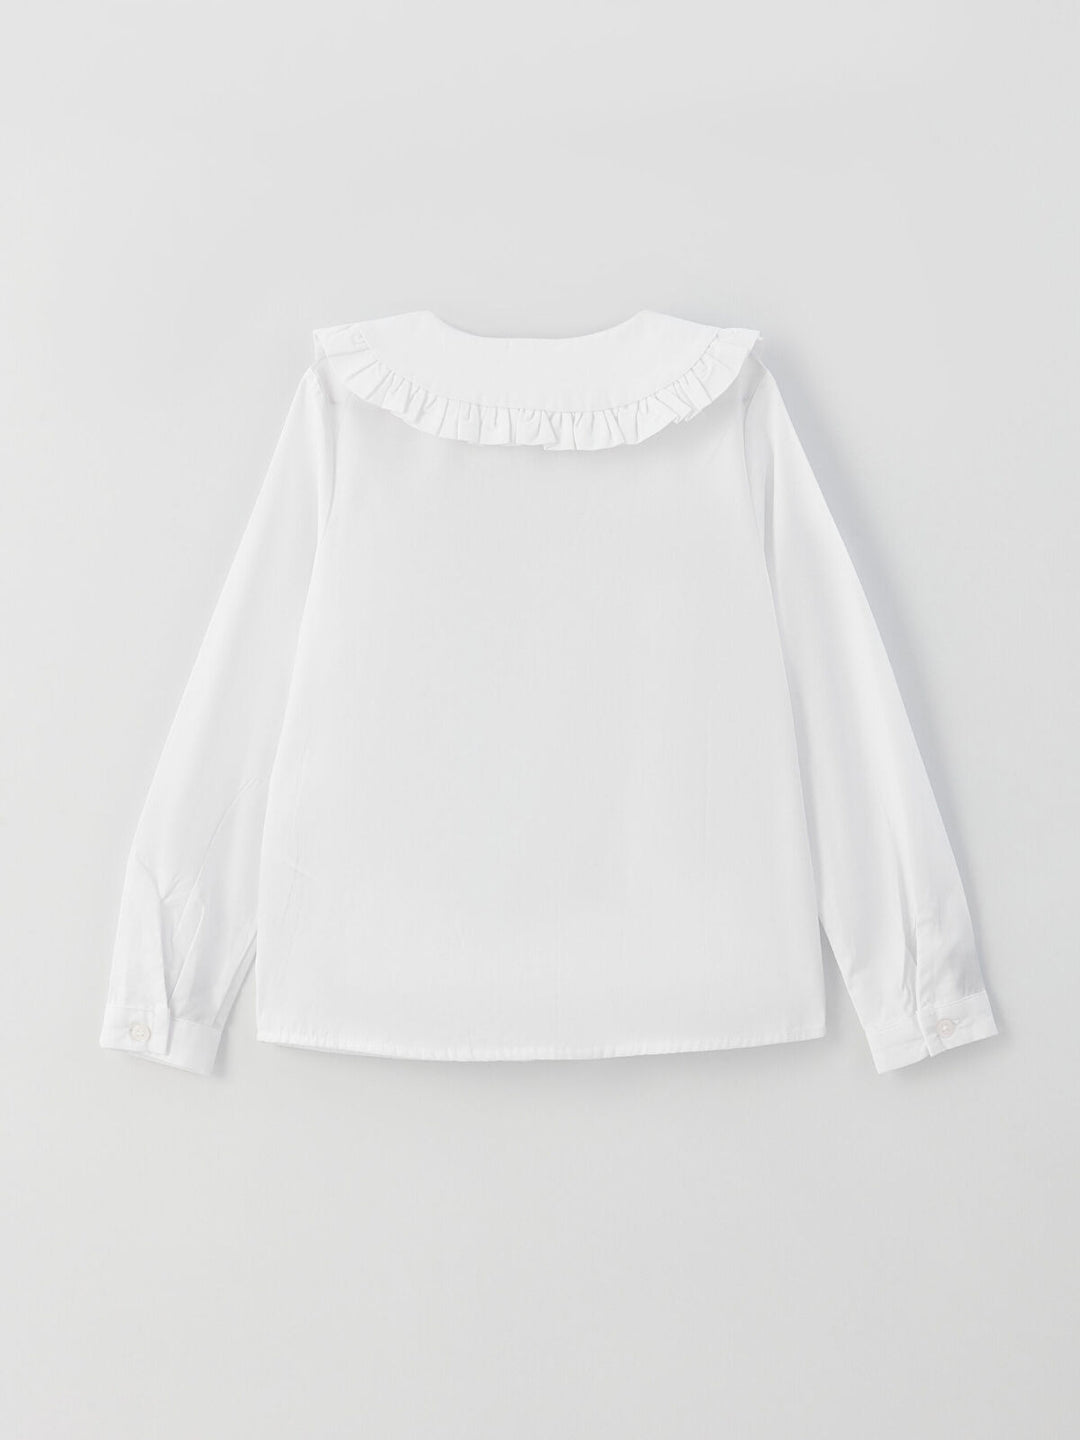 Kids Baby Collar Basic Long Sleeve Girl Shirt